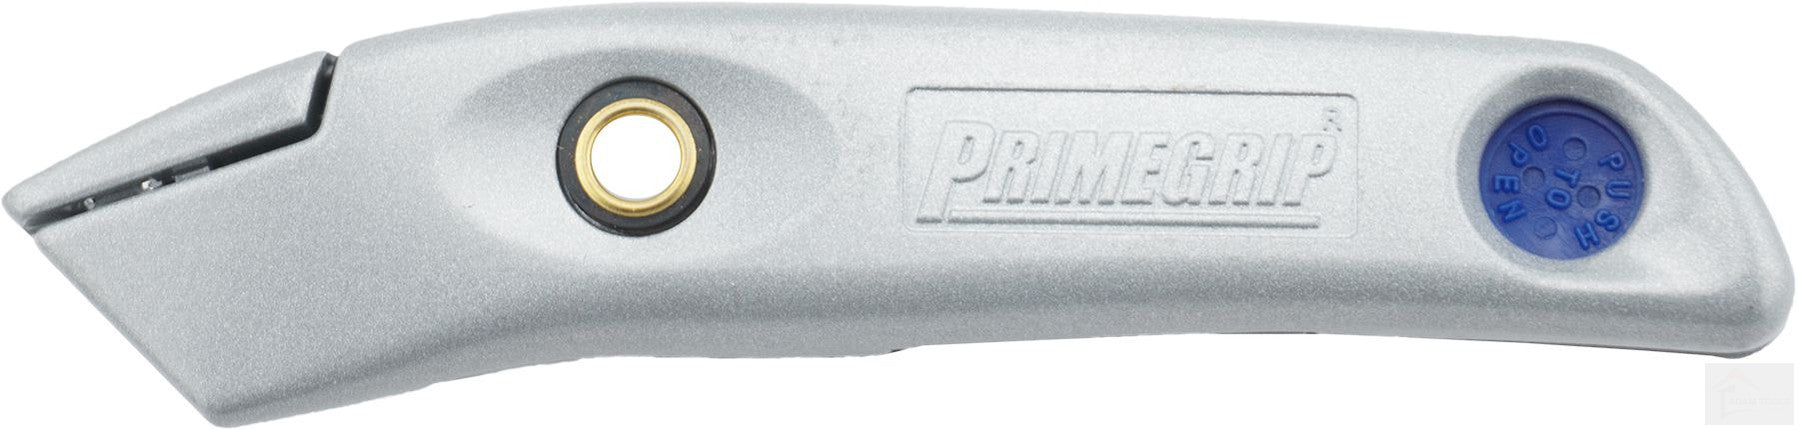 PRIMEGRIP Fixed Blade Swing Type Knife [36-290]